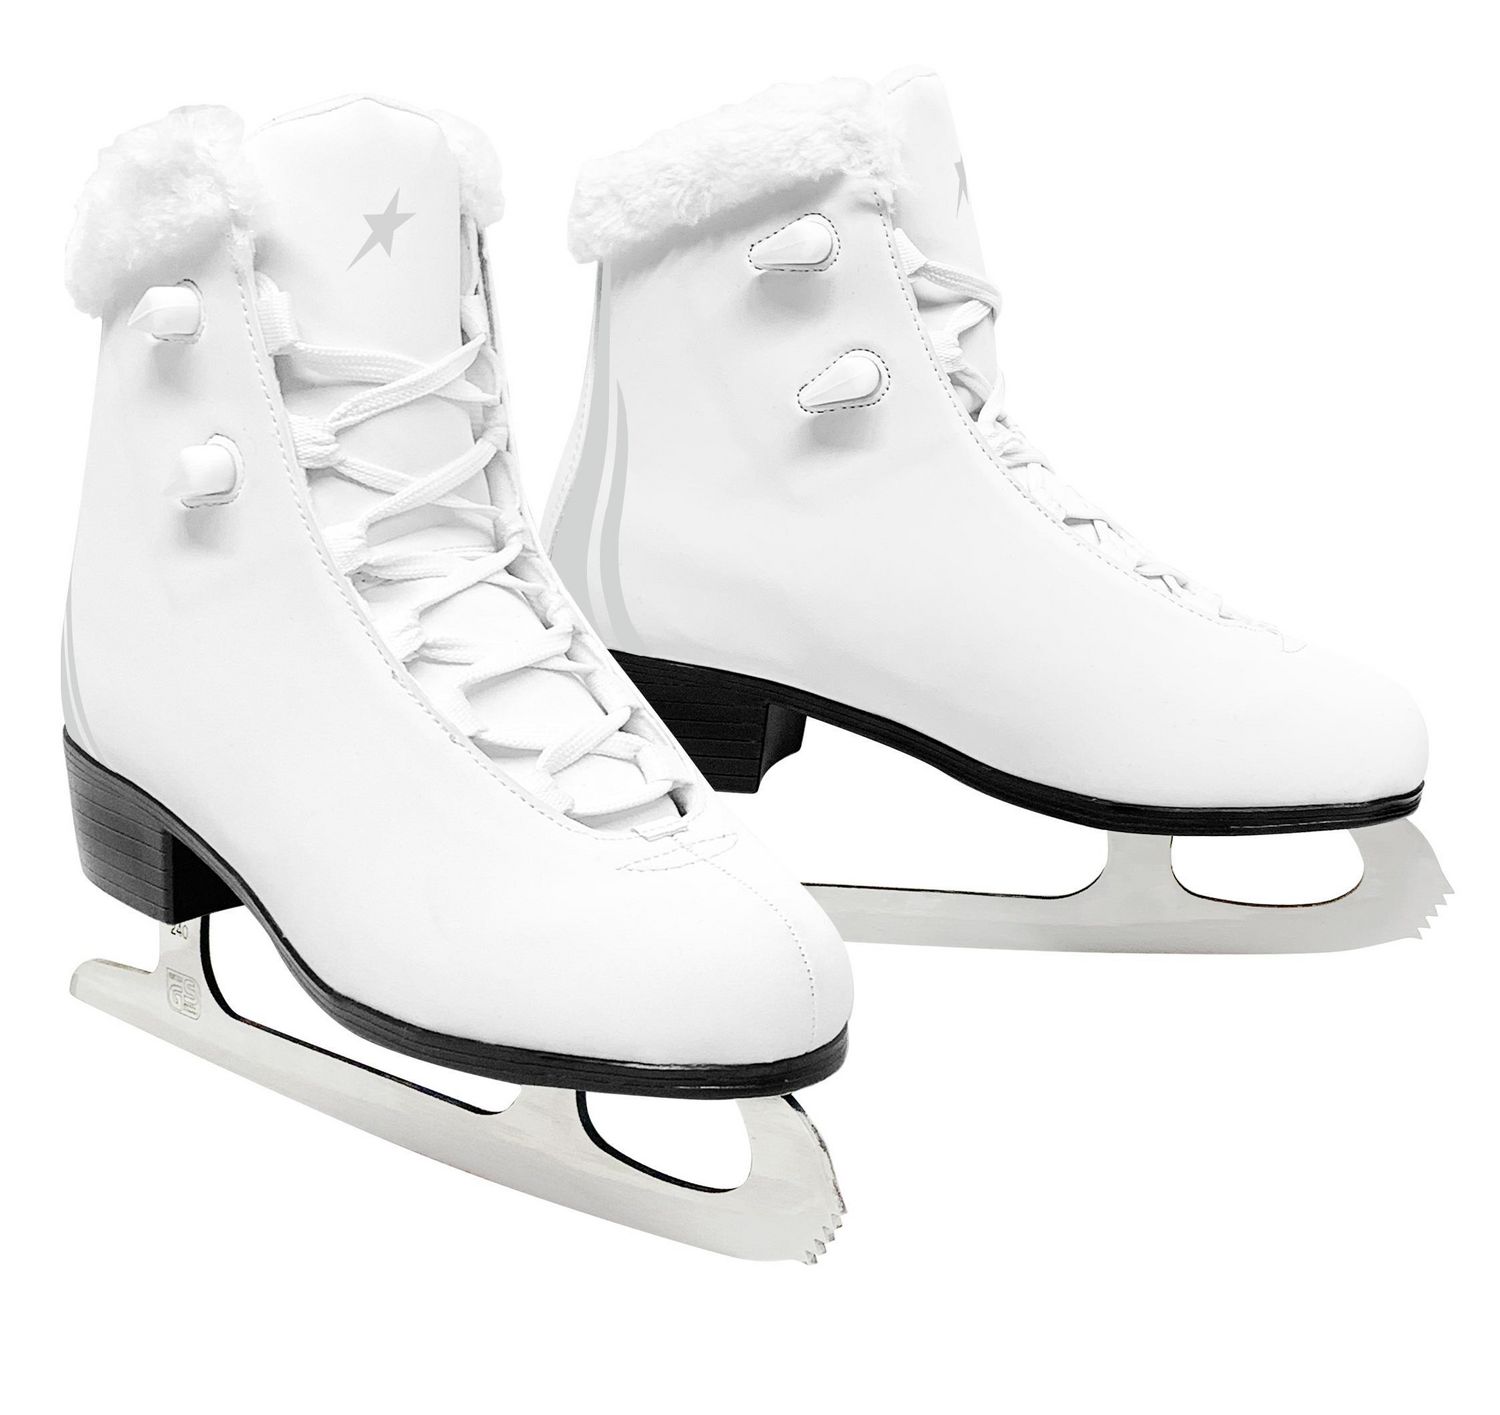 ladies ice skates size 9